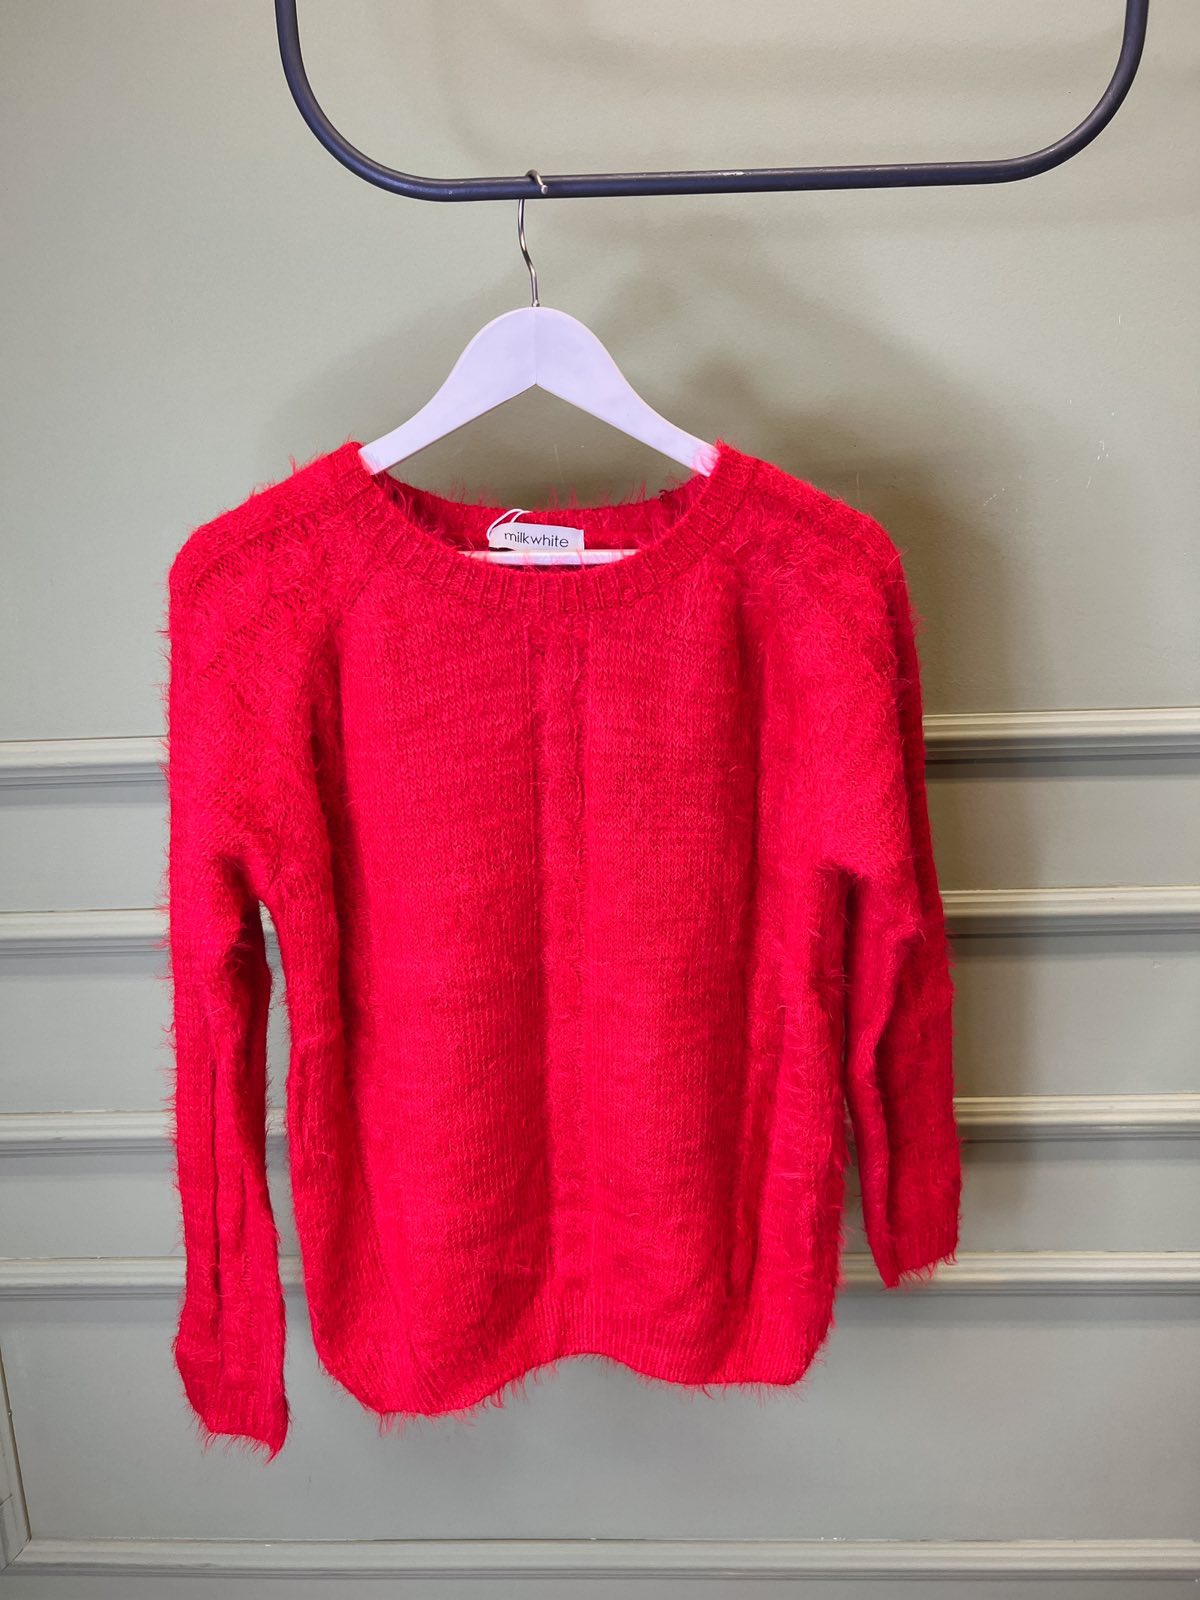 Milkwhite Knit Sweatshirt Red